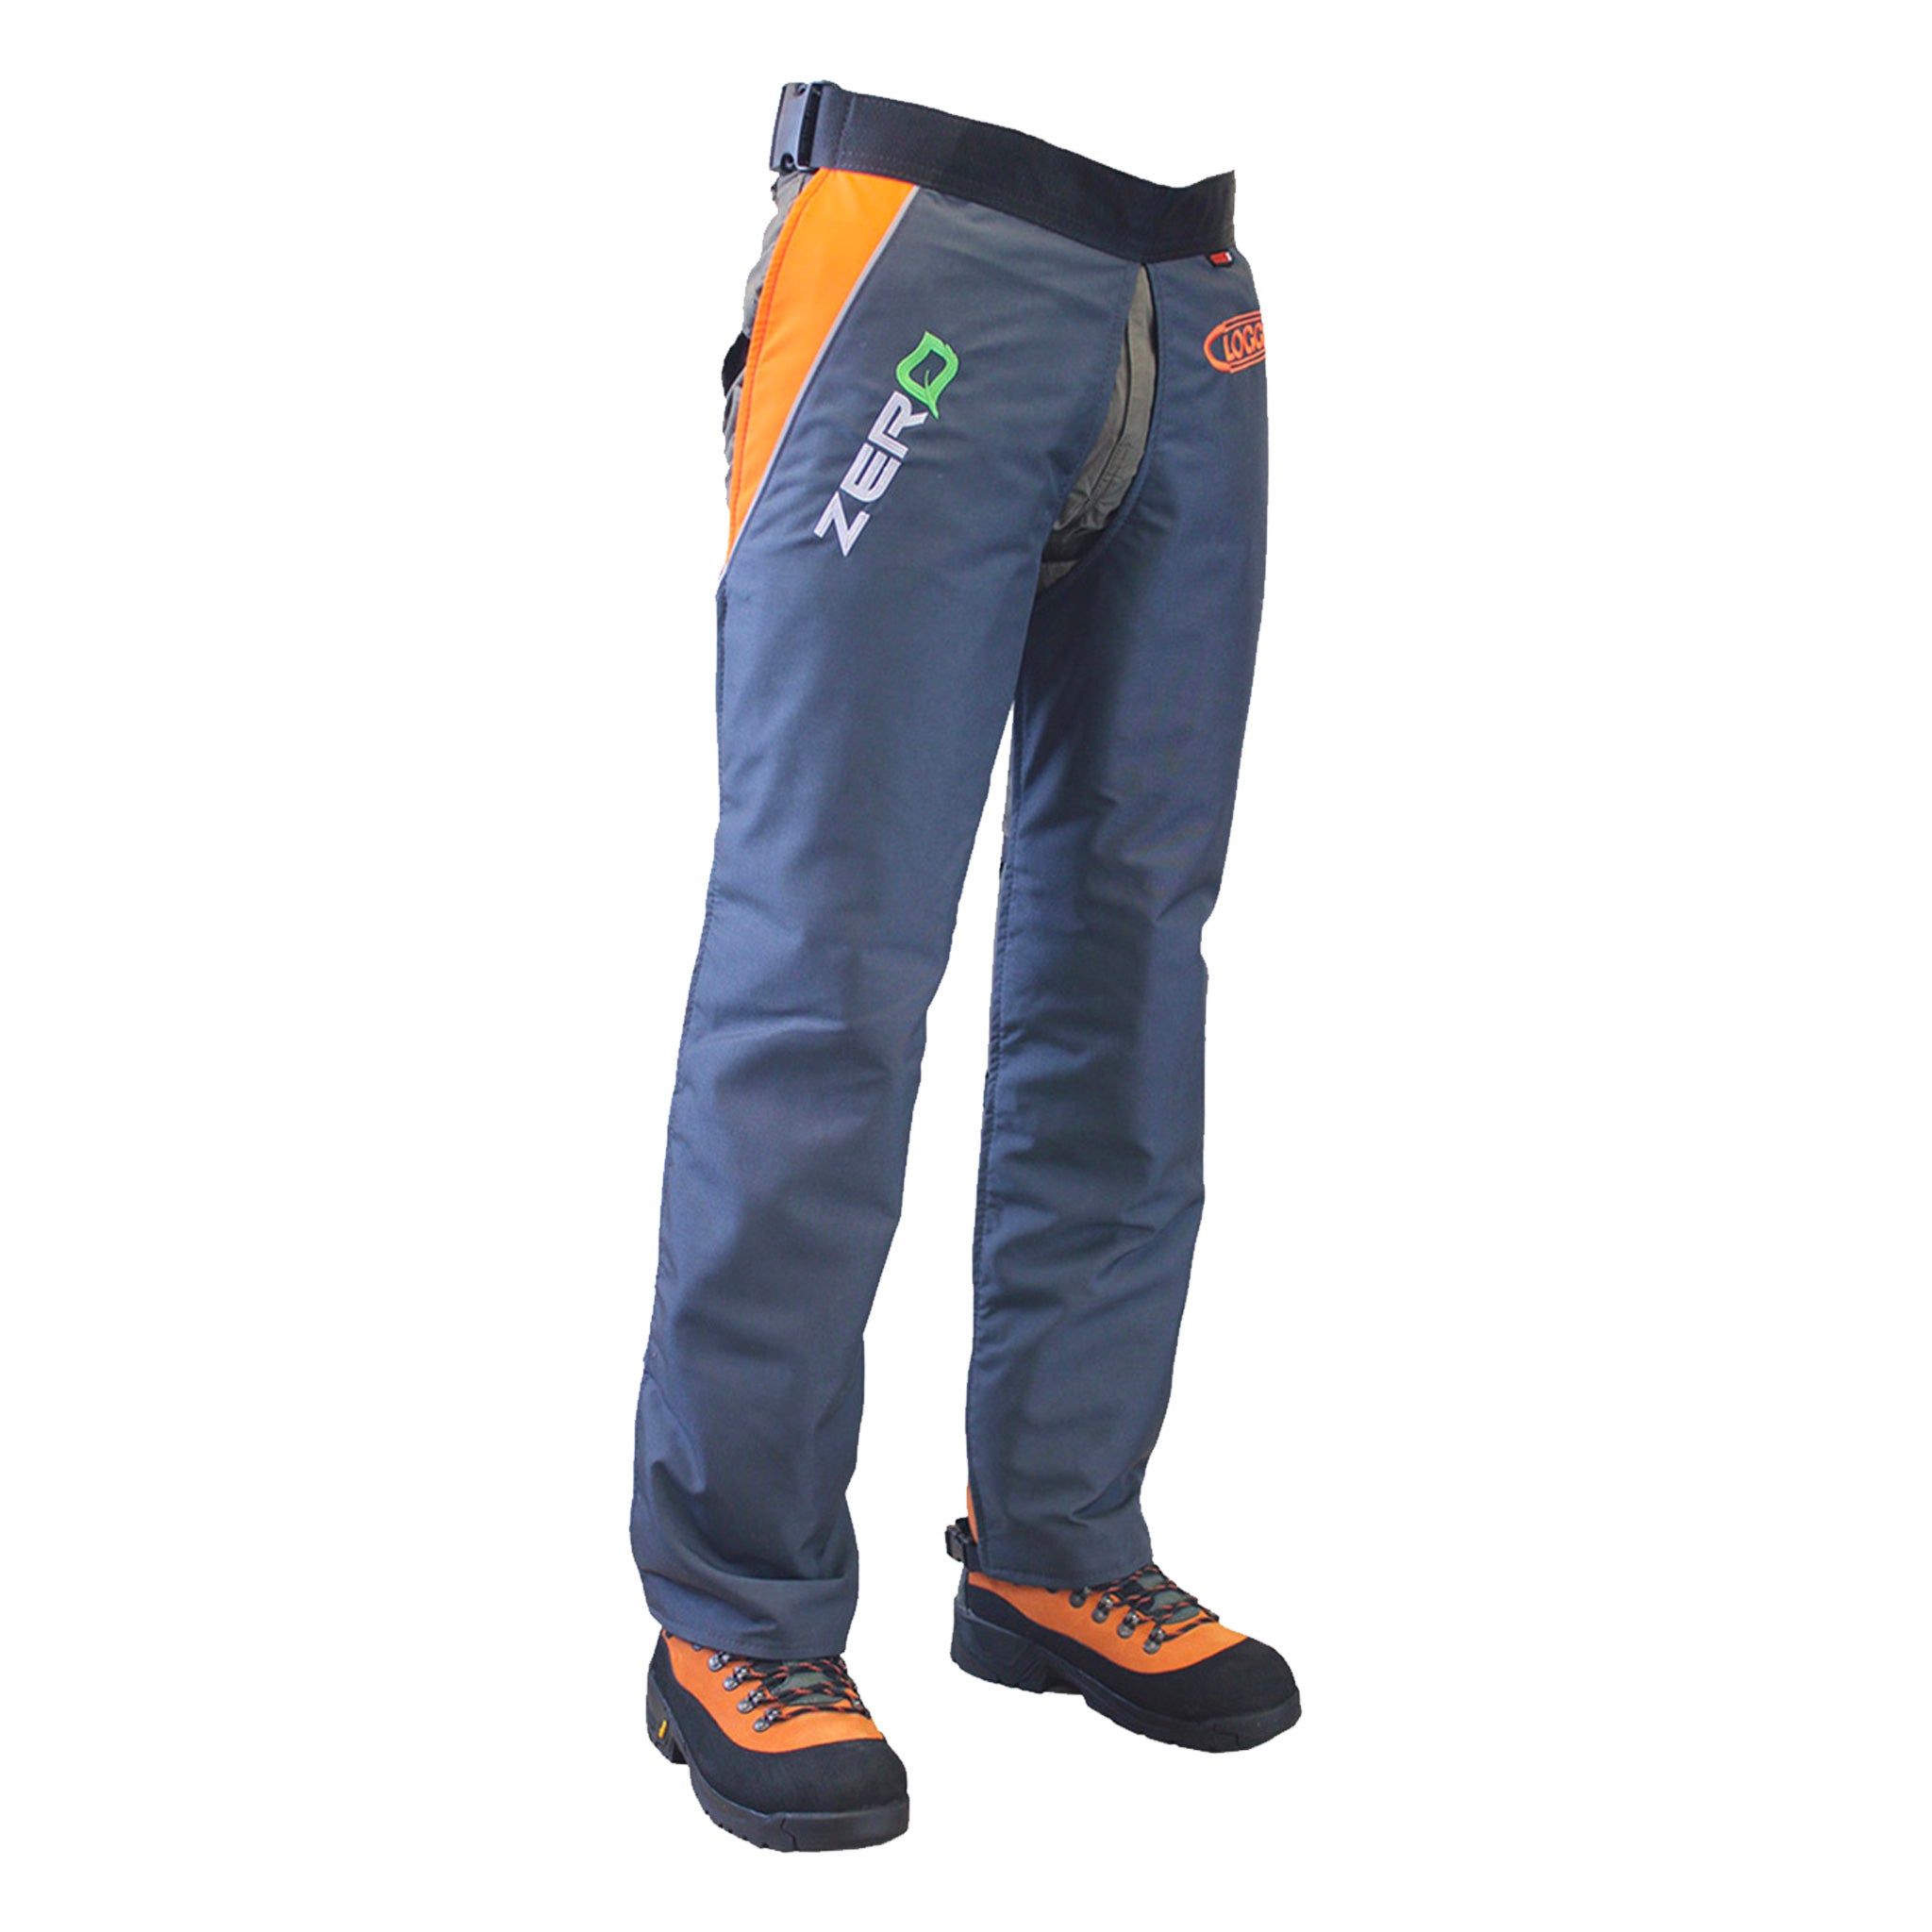 Clogger Zero Light and Cool Men's Chainsaw Pants in Hi Vis Orange